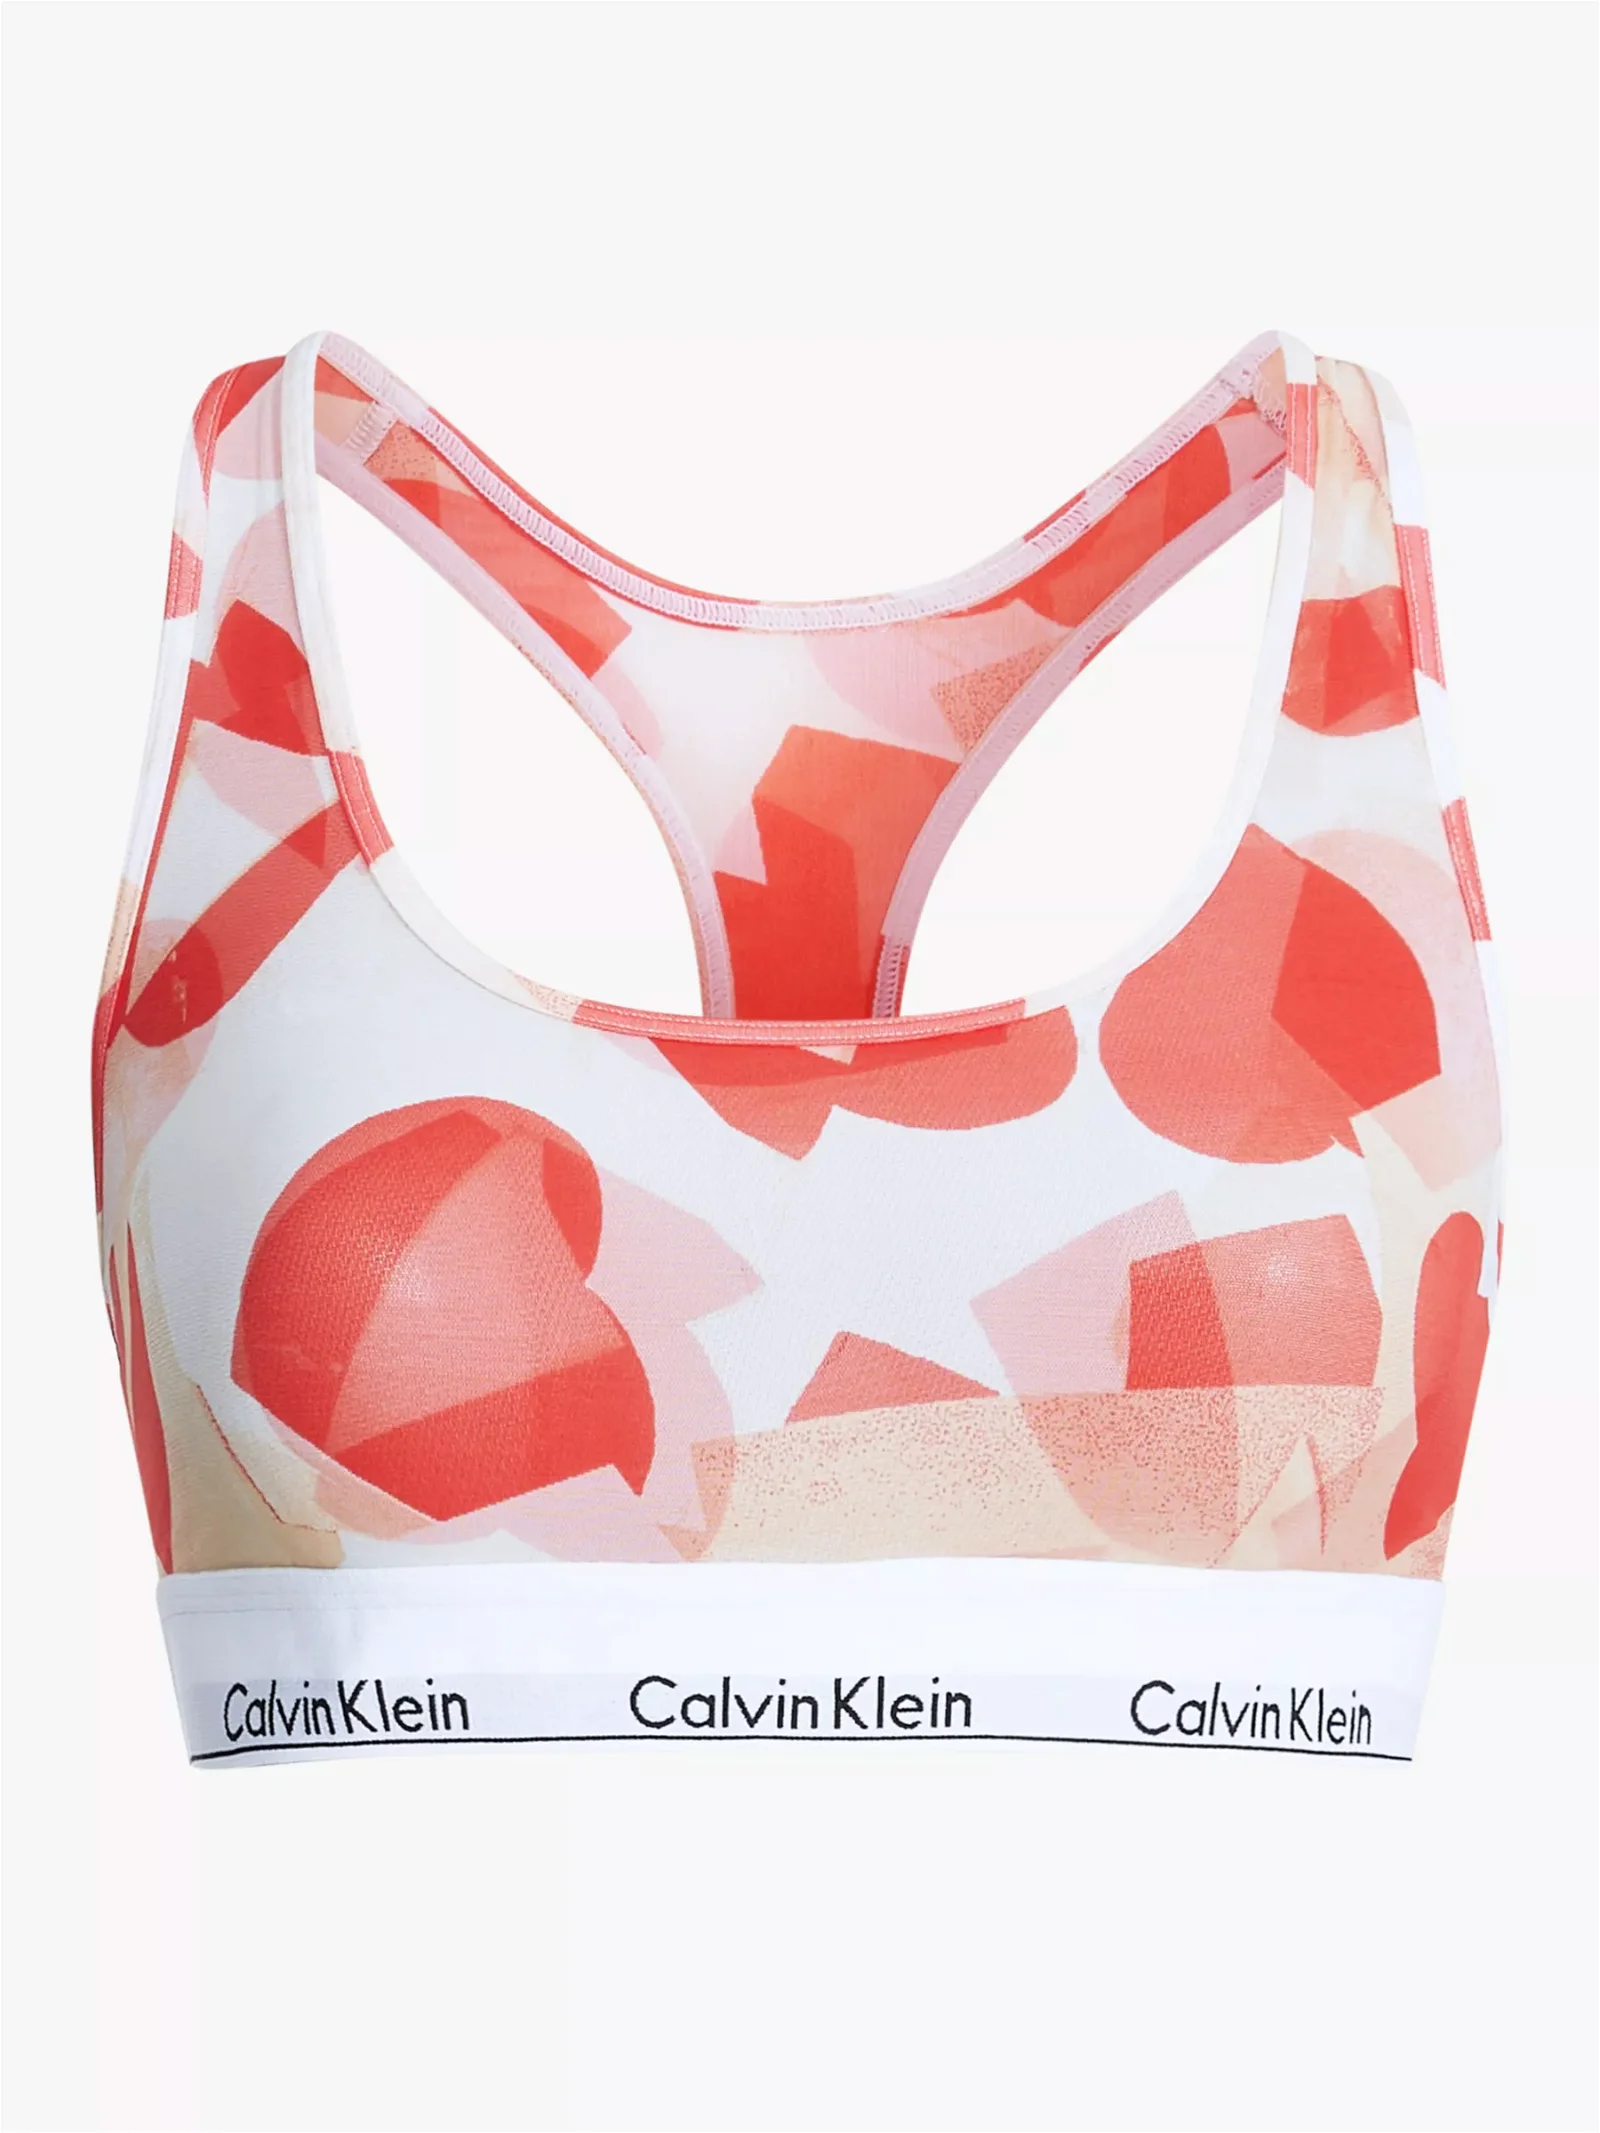 NEW Calvin Klein Printed Hearts Bralette Heart BRA QP1895O-913 Size Small  NWT